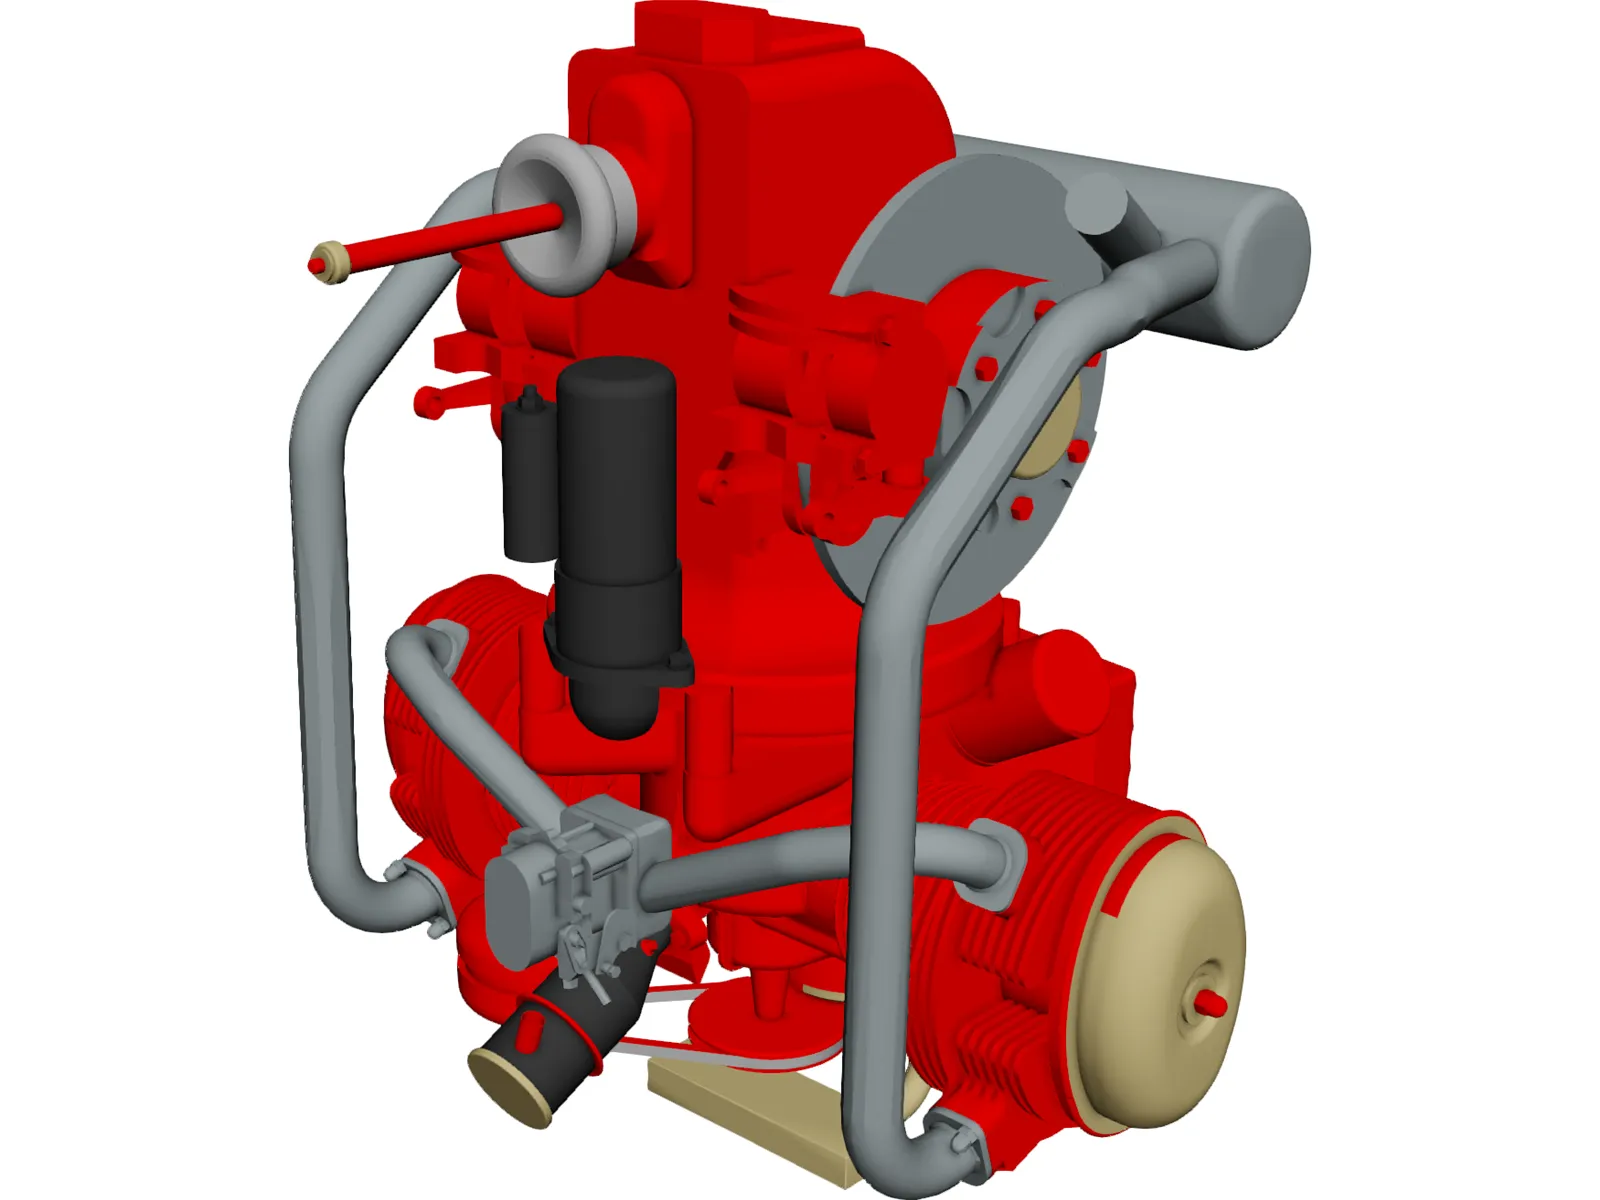 2CV Engine 3D Model